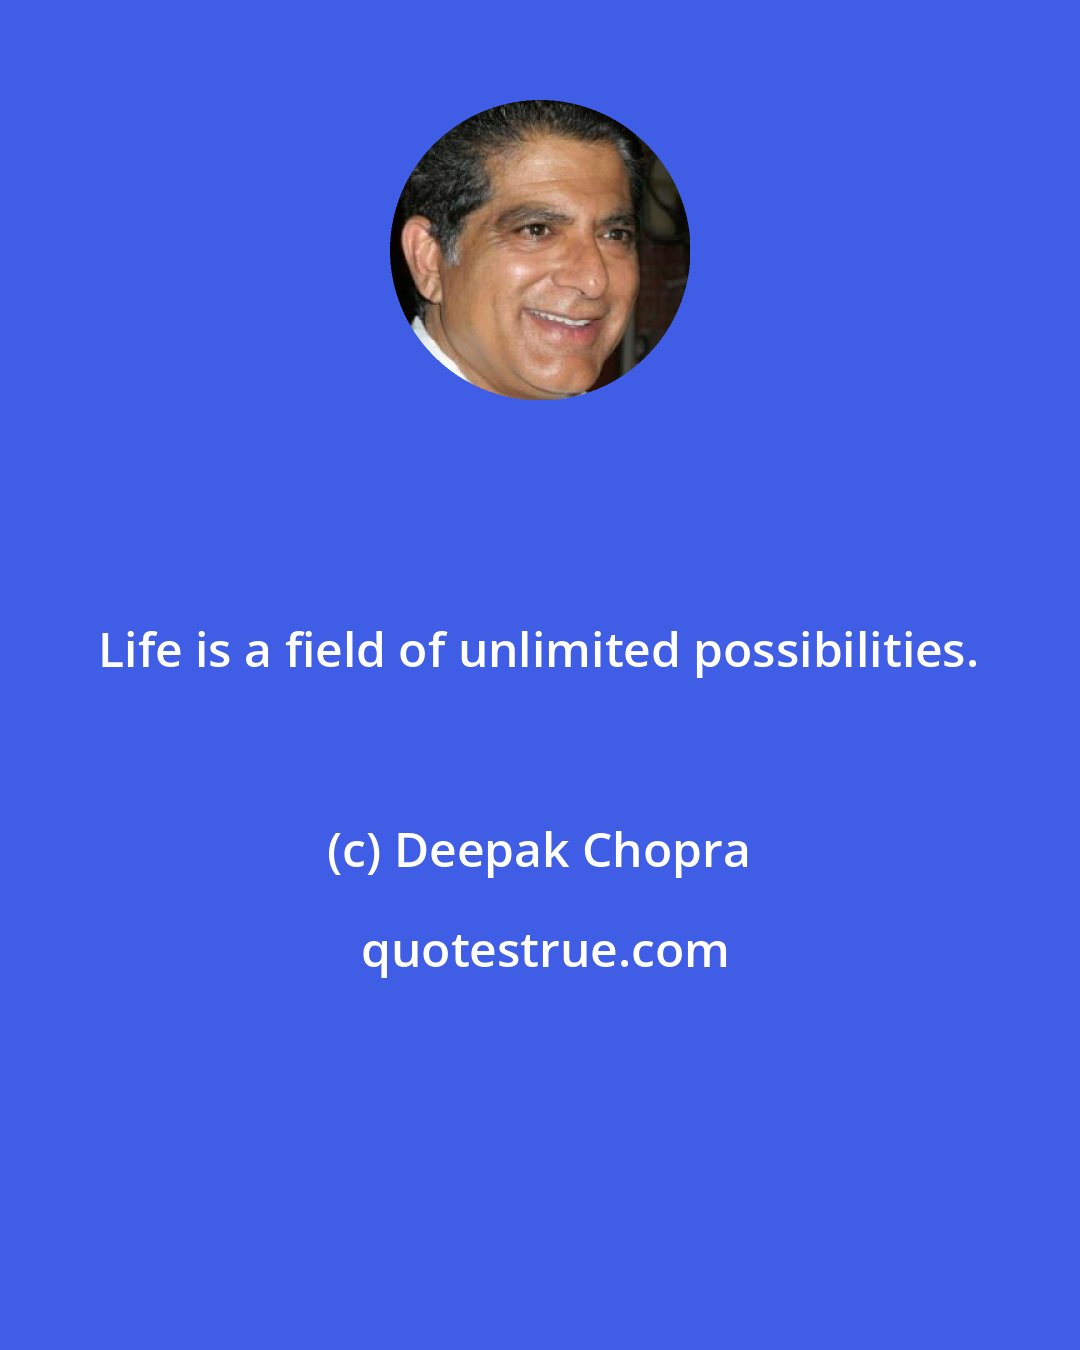 Deepak Chopra: Life is a field of unlimited possibilities.